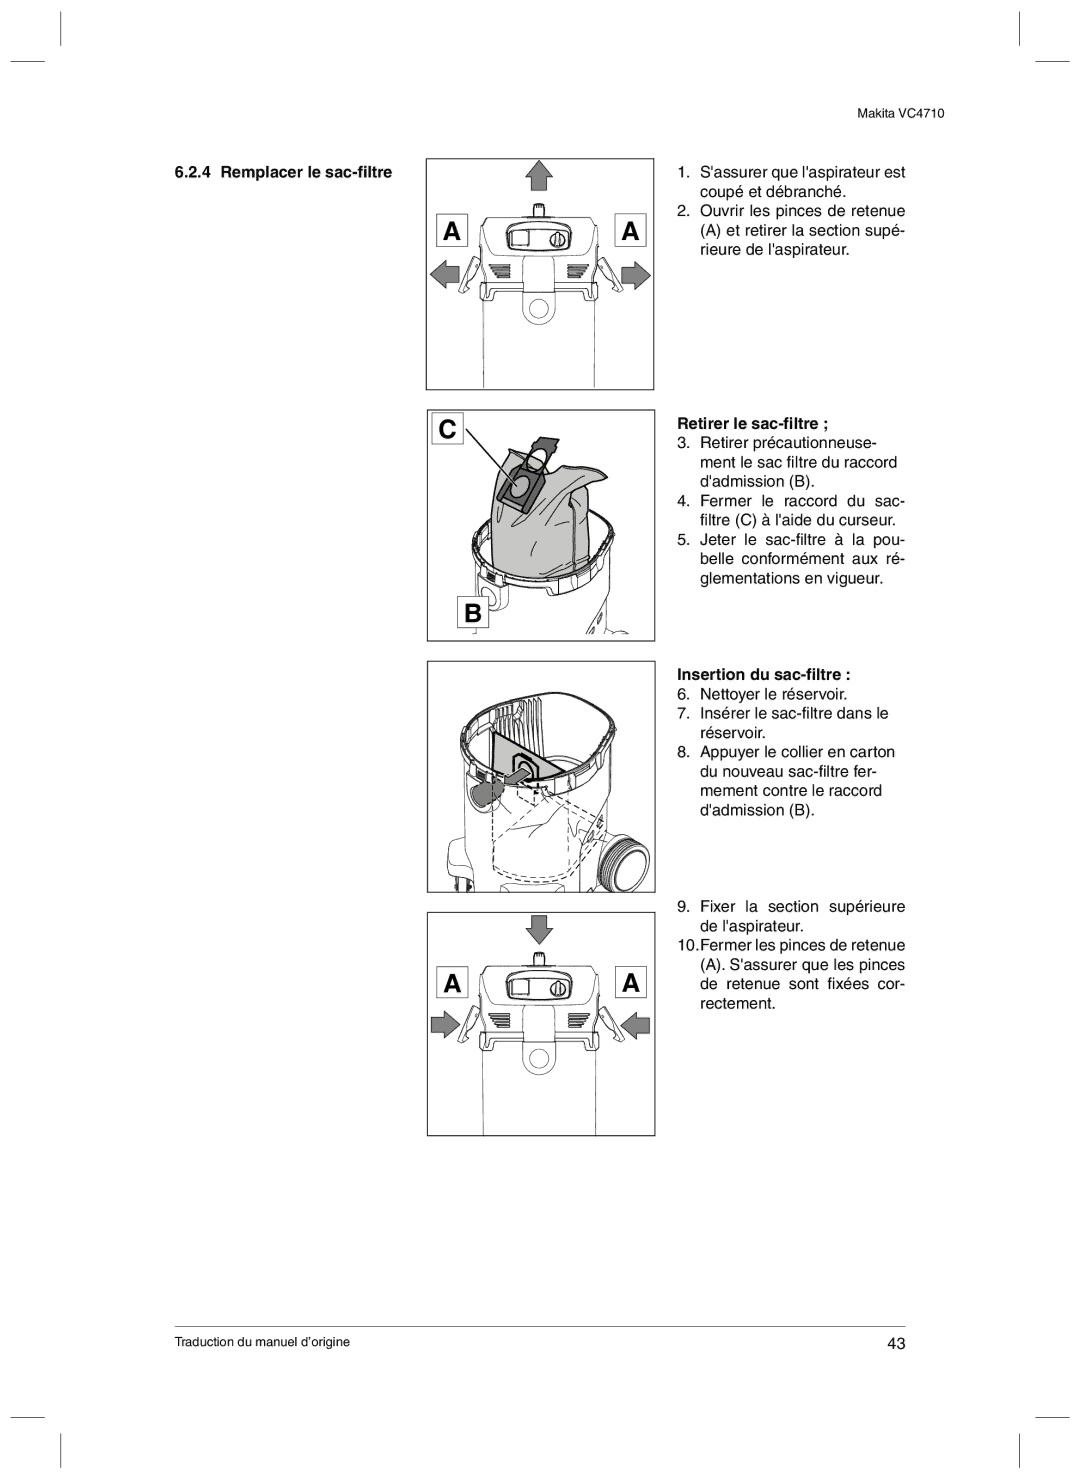 Makita VC4710 manual Remplacer le sac-filtre, Retirer le sac-filtre, Insertion du sac-filtre 